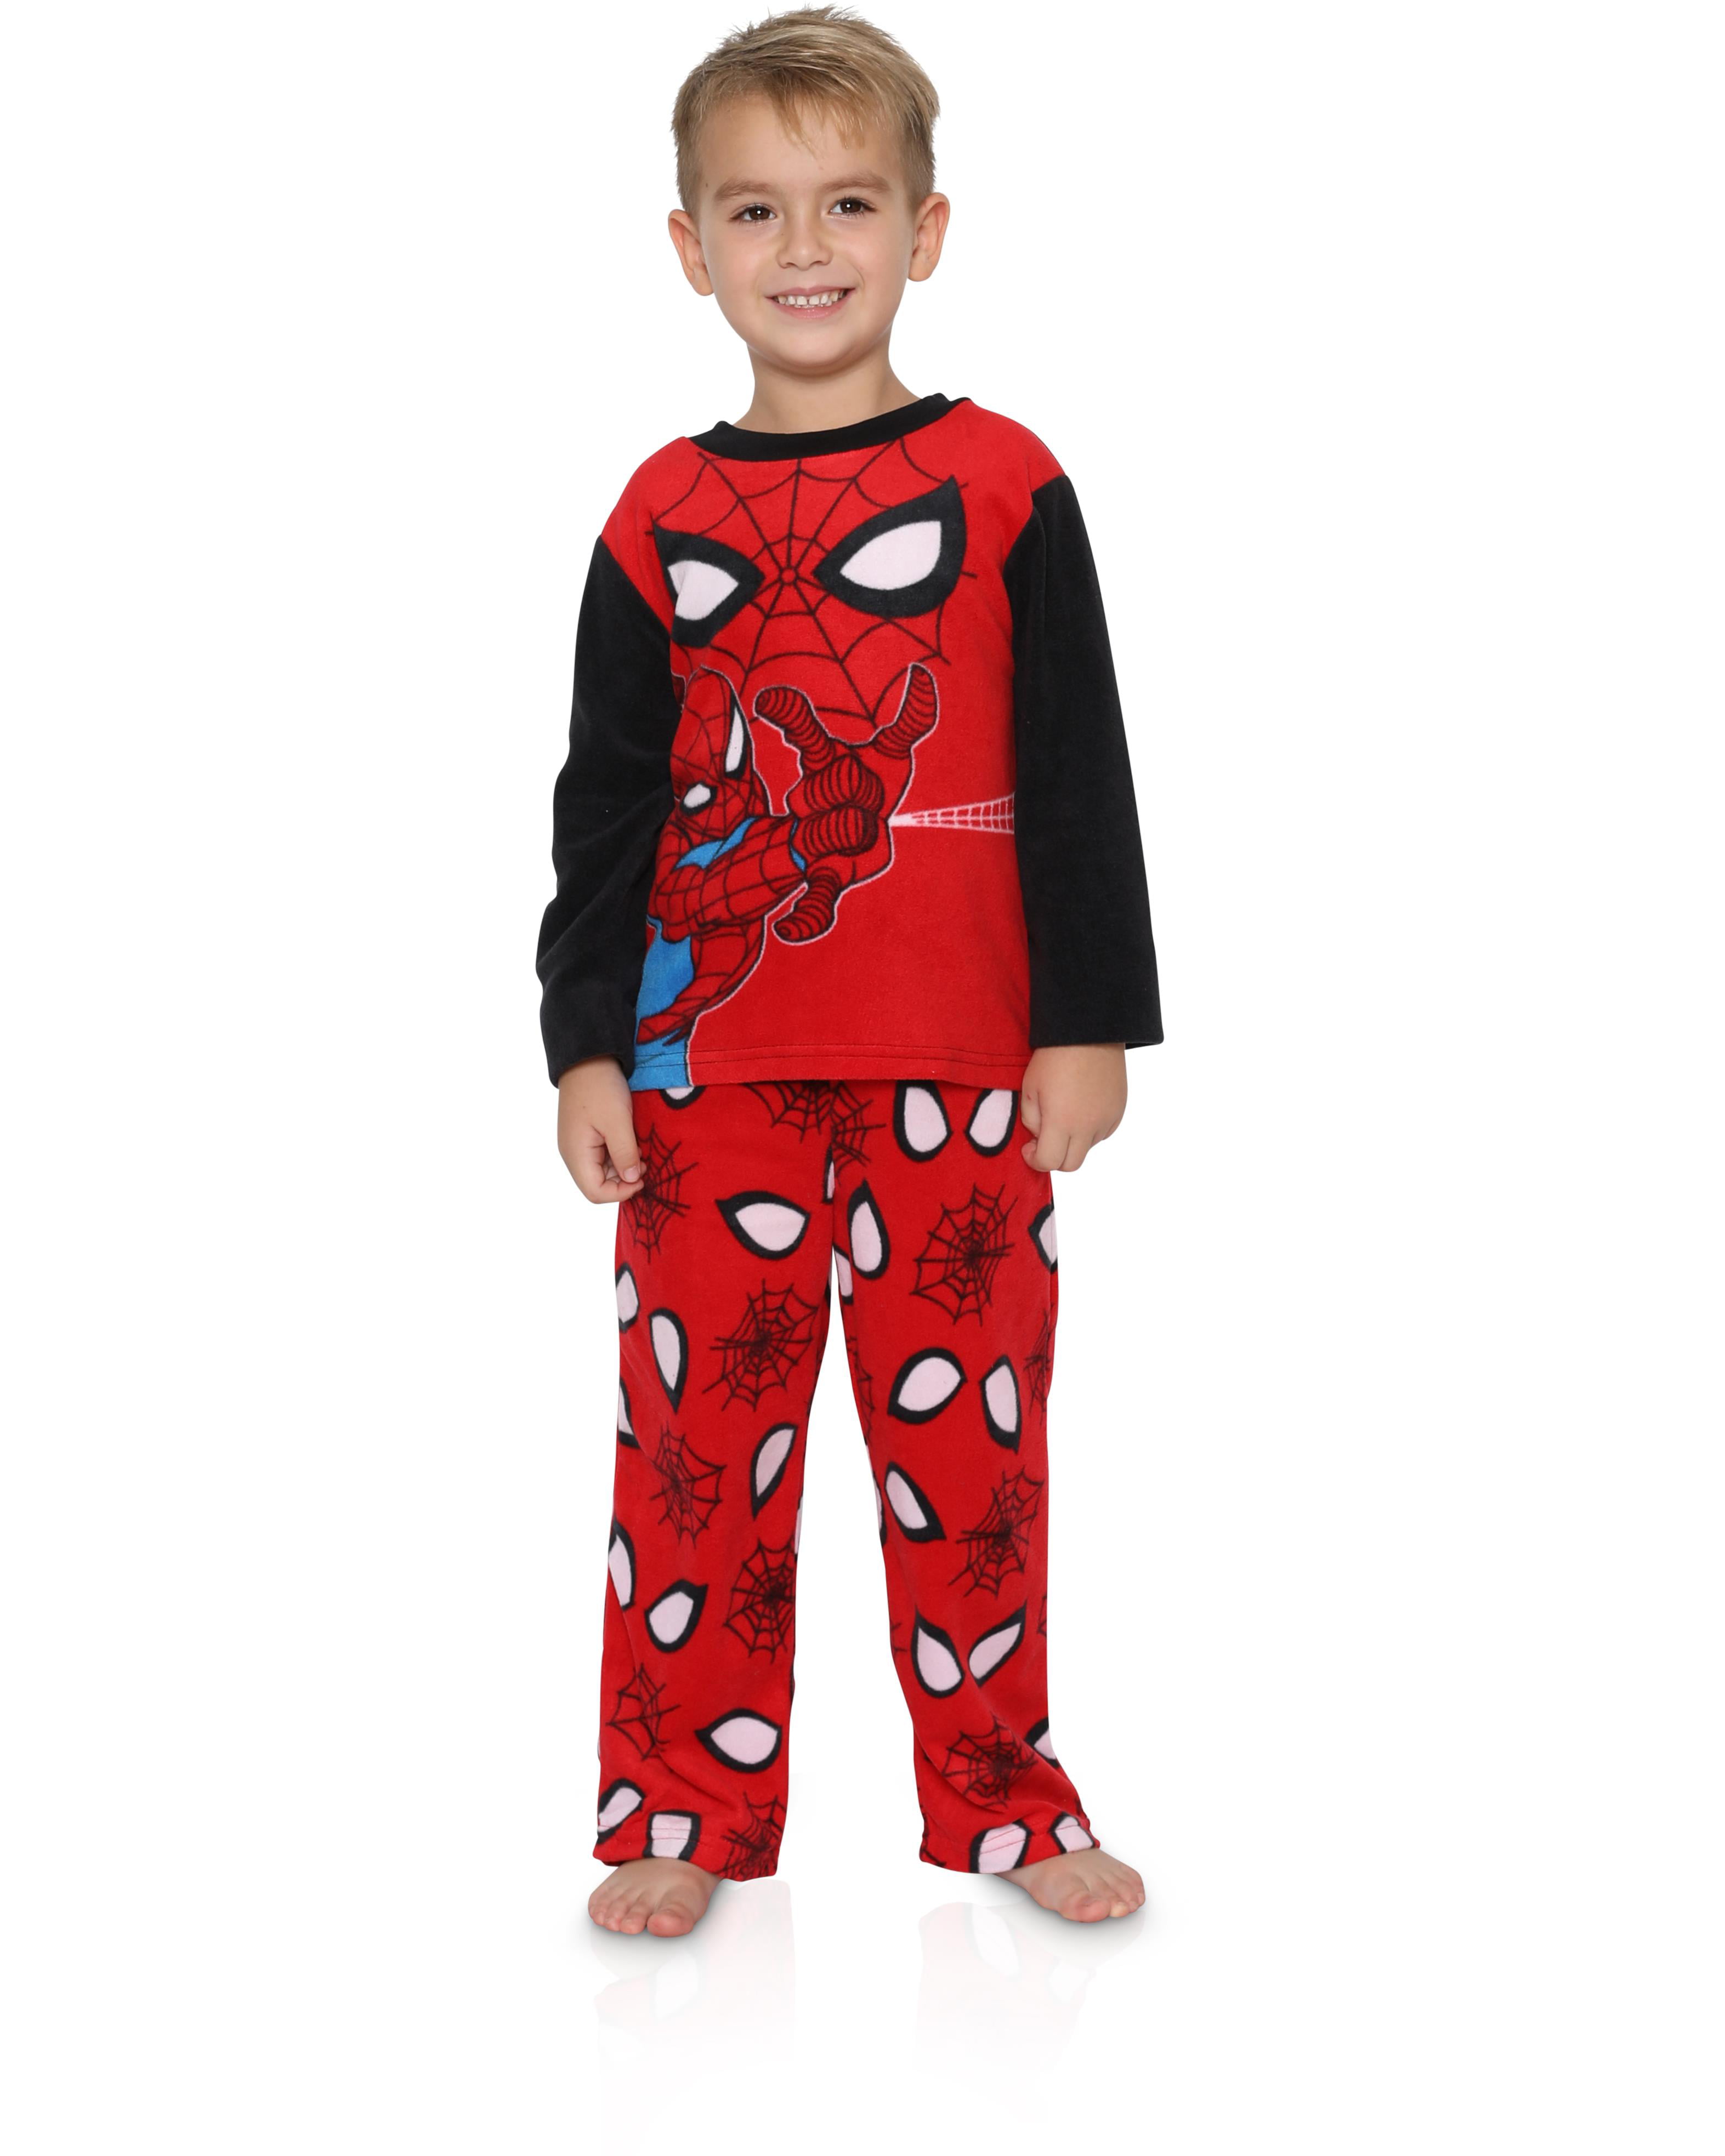 Spider Man Little Boys Pajamas Kids Pjs Character Long Sleeve Shirt Pant Set 8 Red